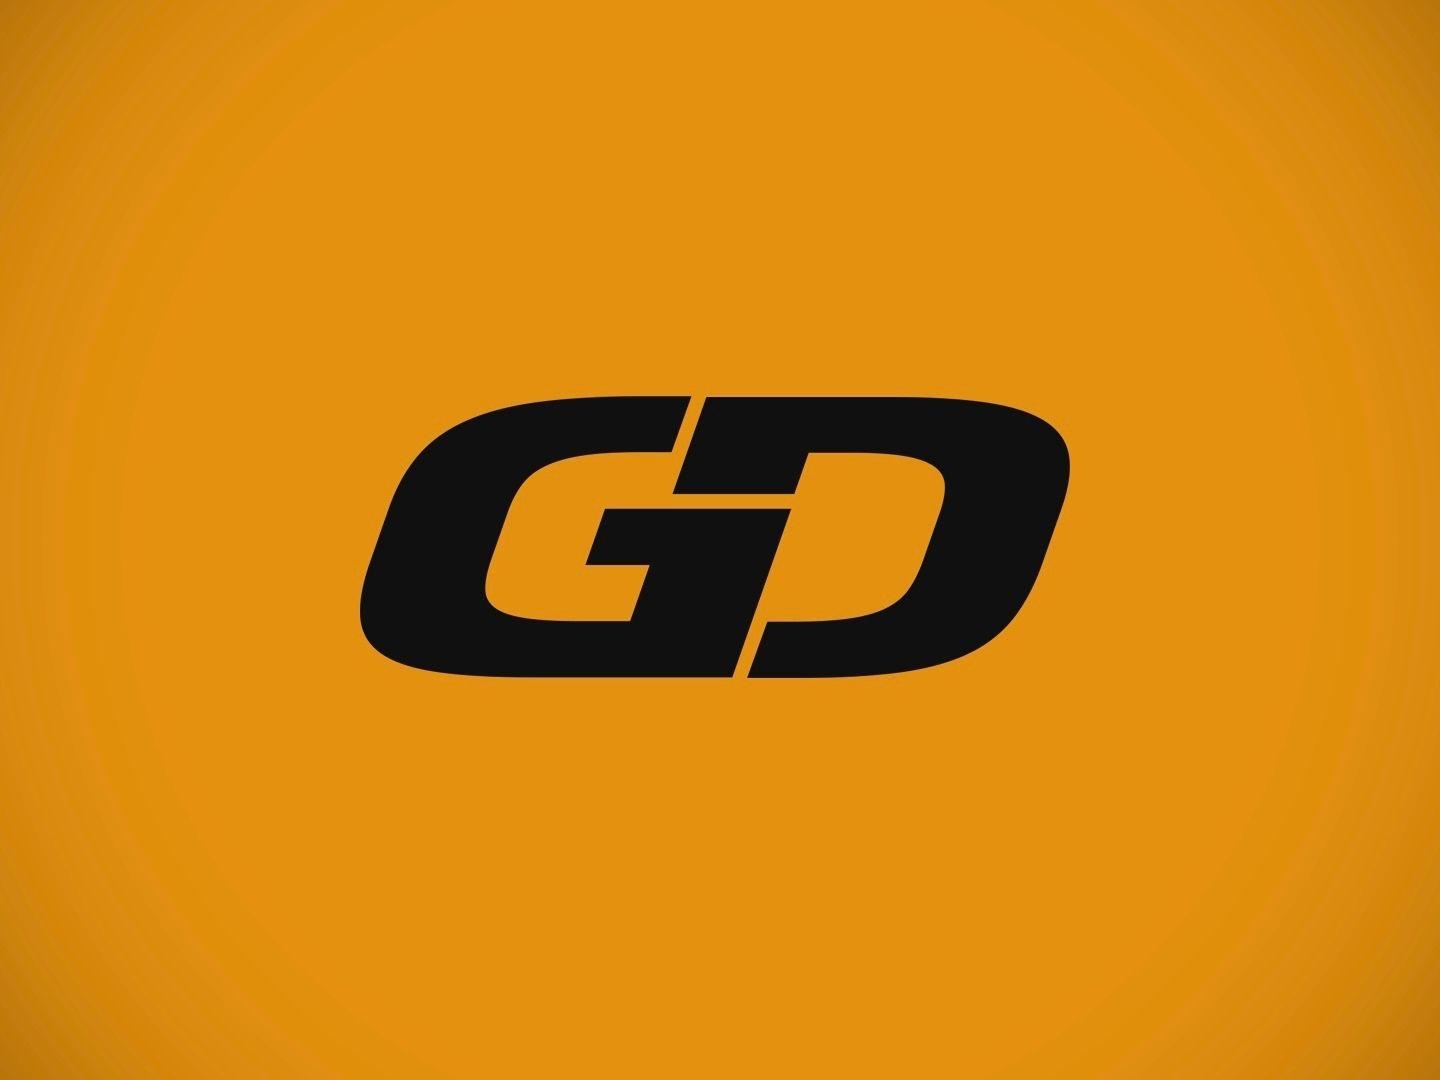 Orange Channel Logo - German Driver YouTube channel logo revised by Chris Neuman ...